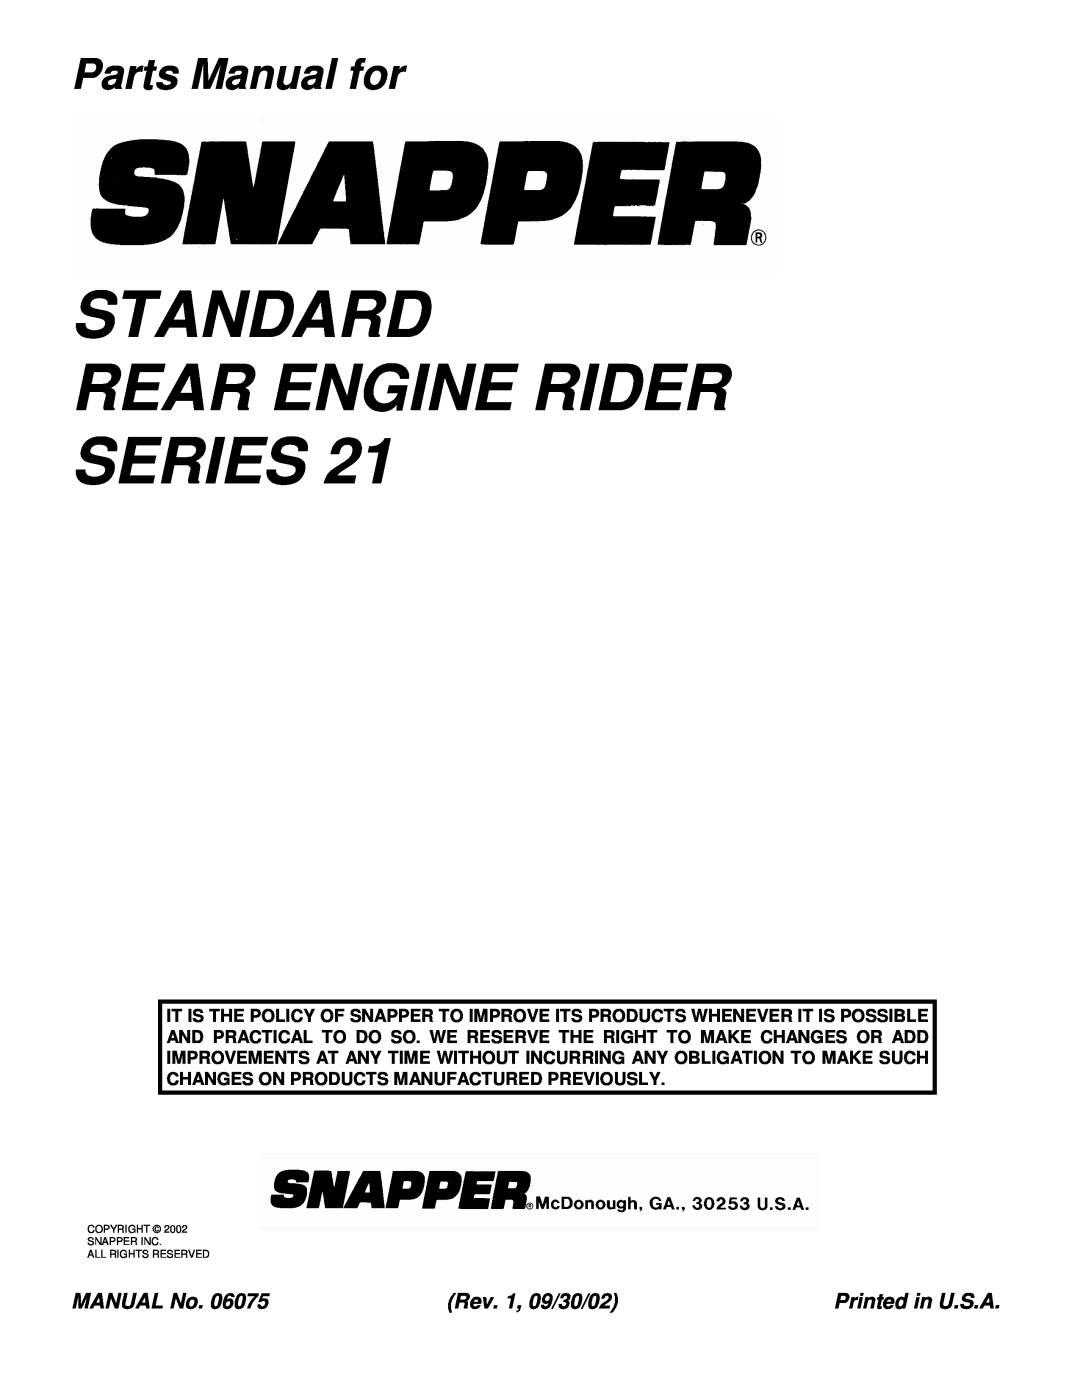 Snapper M250821BE, M300921B, M280921B manual Standard Rear Engine Rider Series, Parts Manual for, MANUAL No, Rev. 1, 09/30/02 